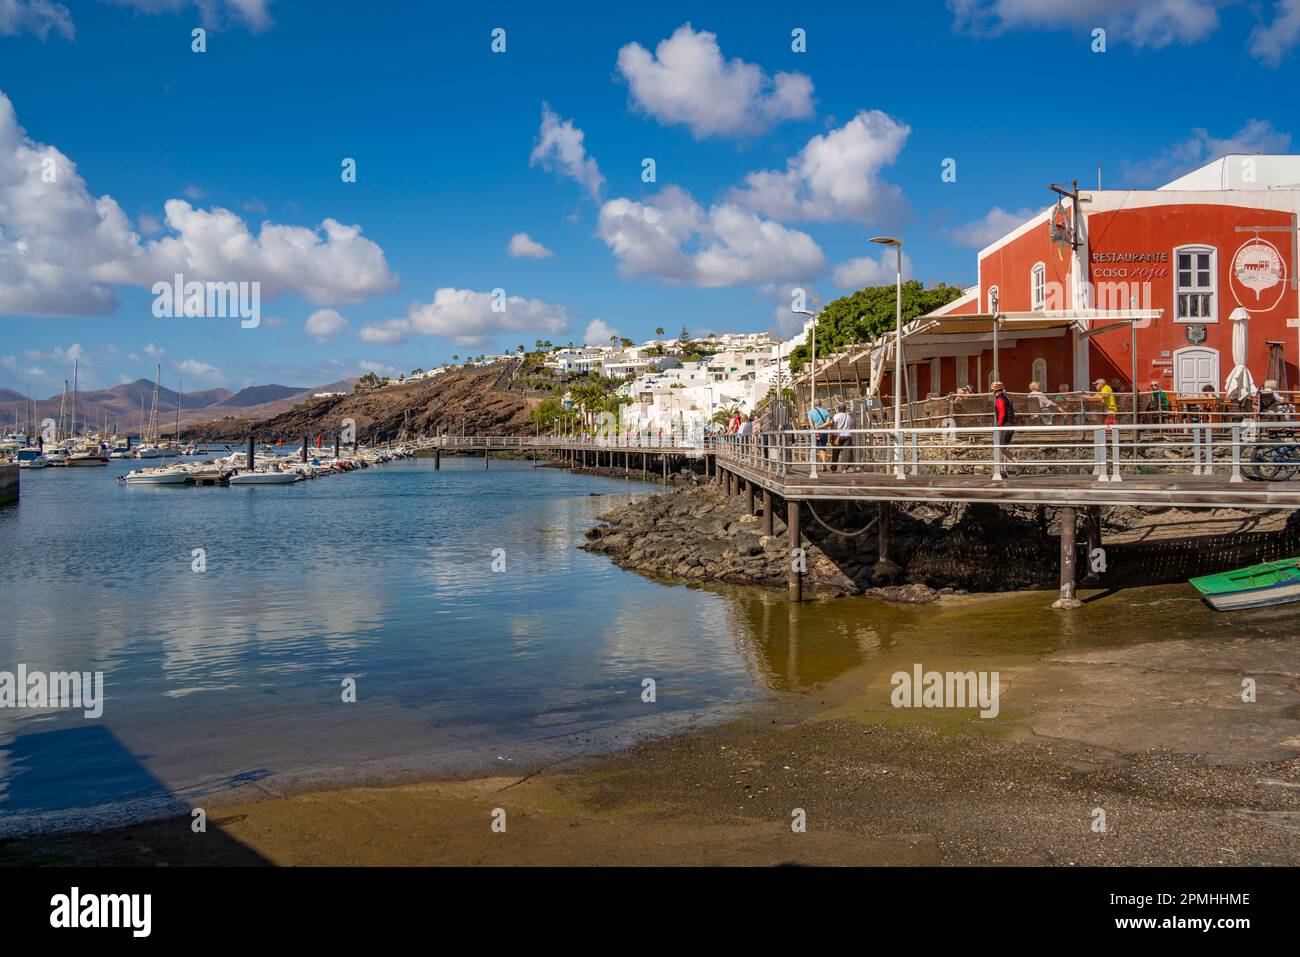 Blick auf das Restaurant mit Blick auf den Hafen, Puerto del Carmen, Lanzarote, Las Palmas, Kanarische Inseln, Spanien, Atlantik, Europa Stockfoto